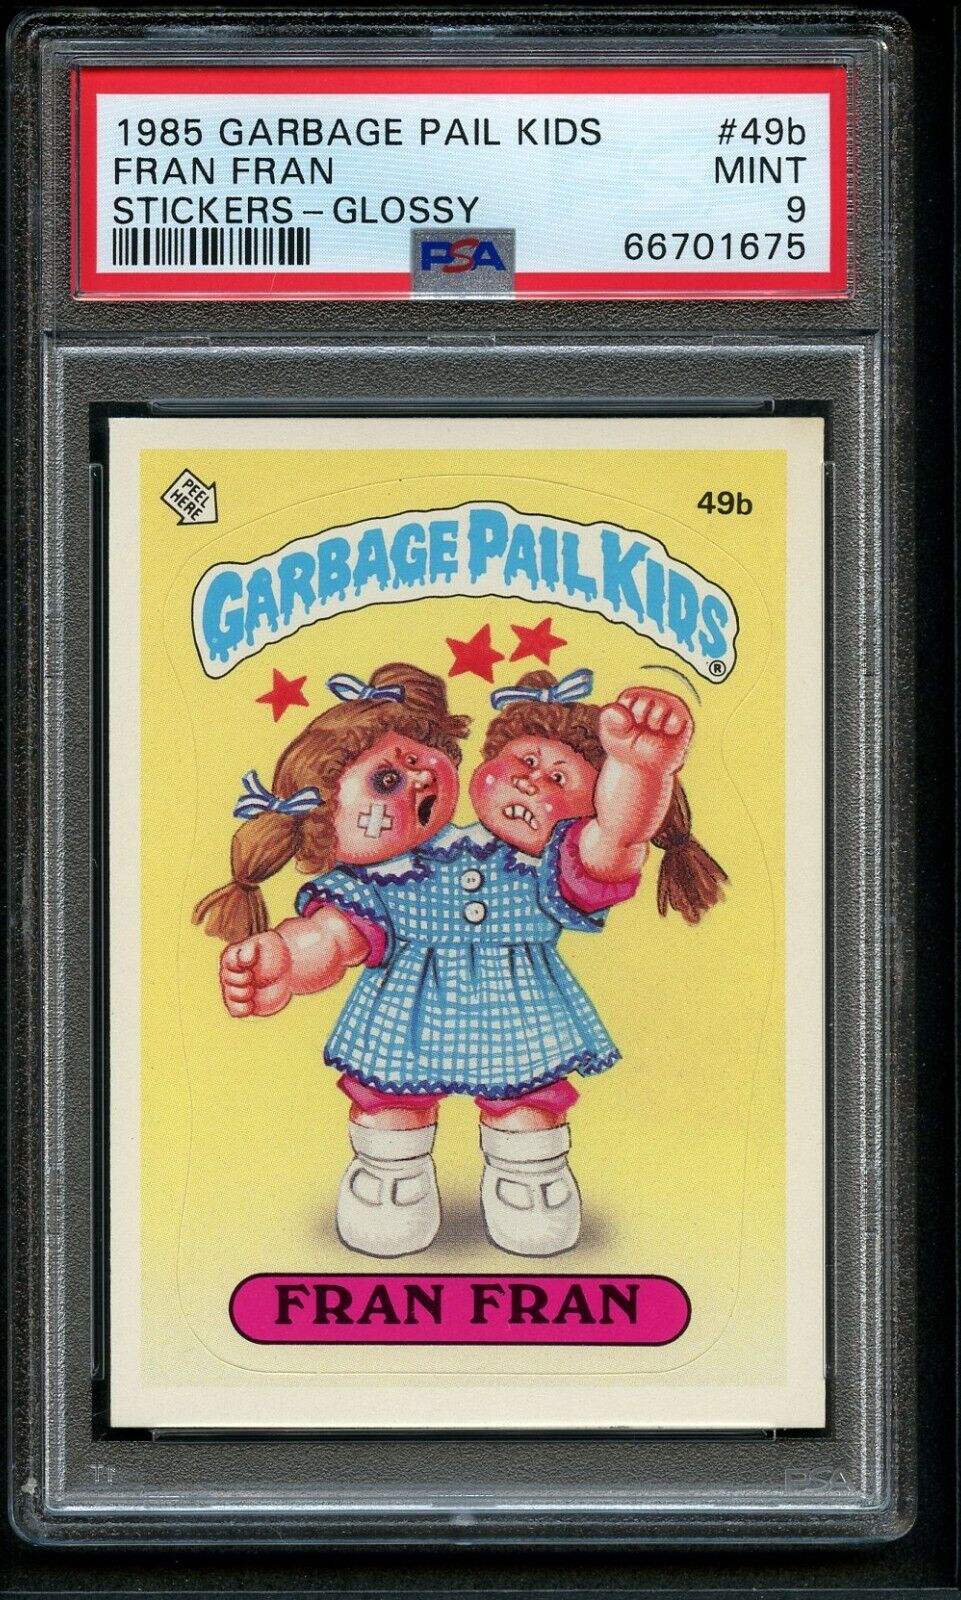 1985 Garbage Pail Kids FRAN FRAN #49b Glossy PSA 9 MINT - Great Centering, Rare